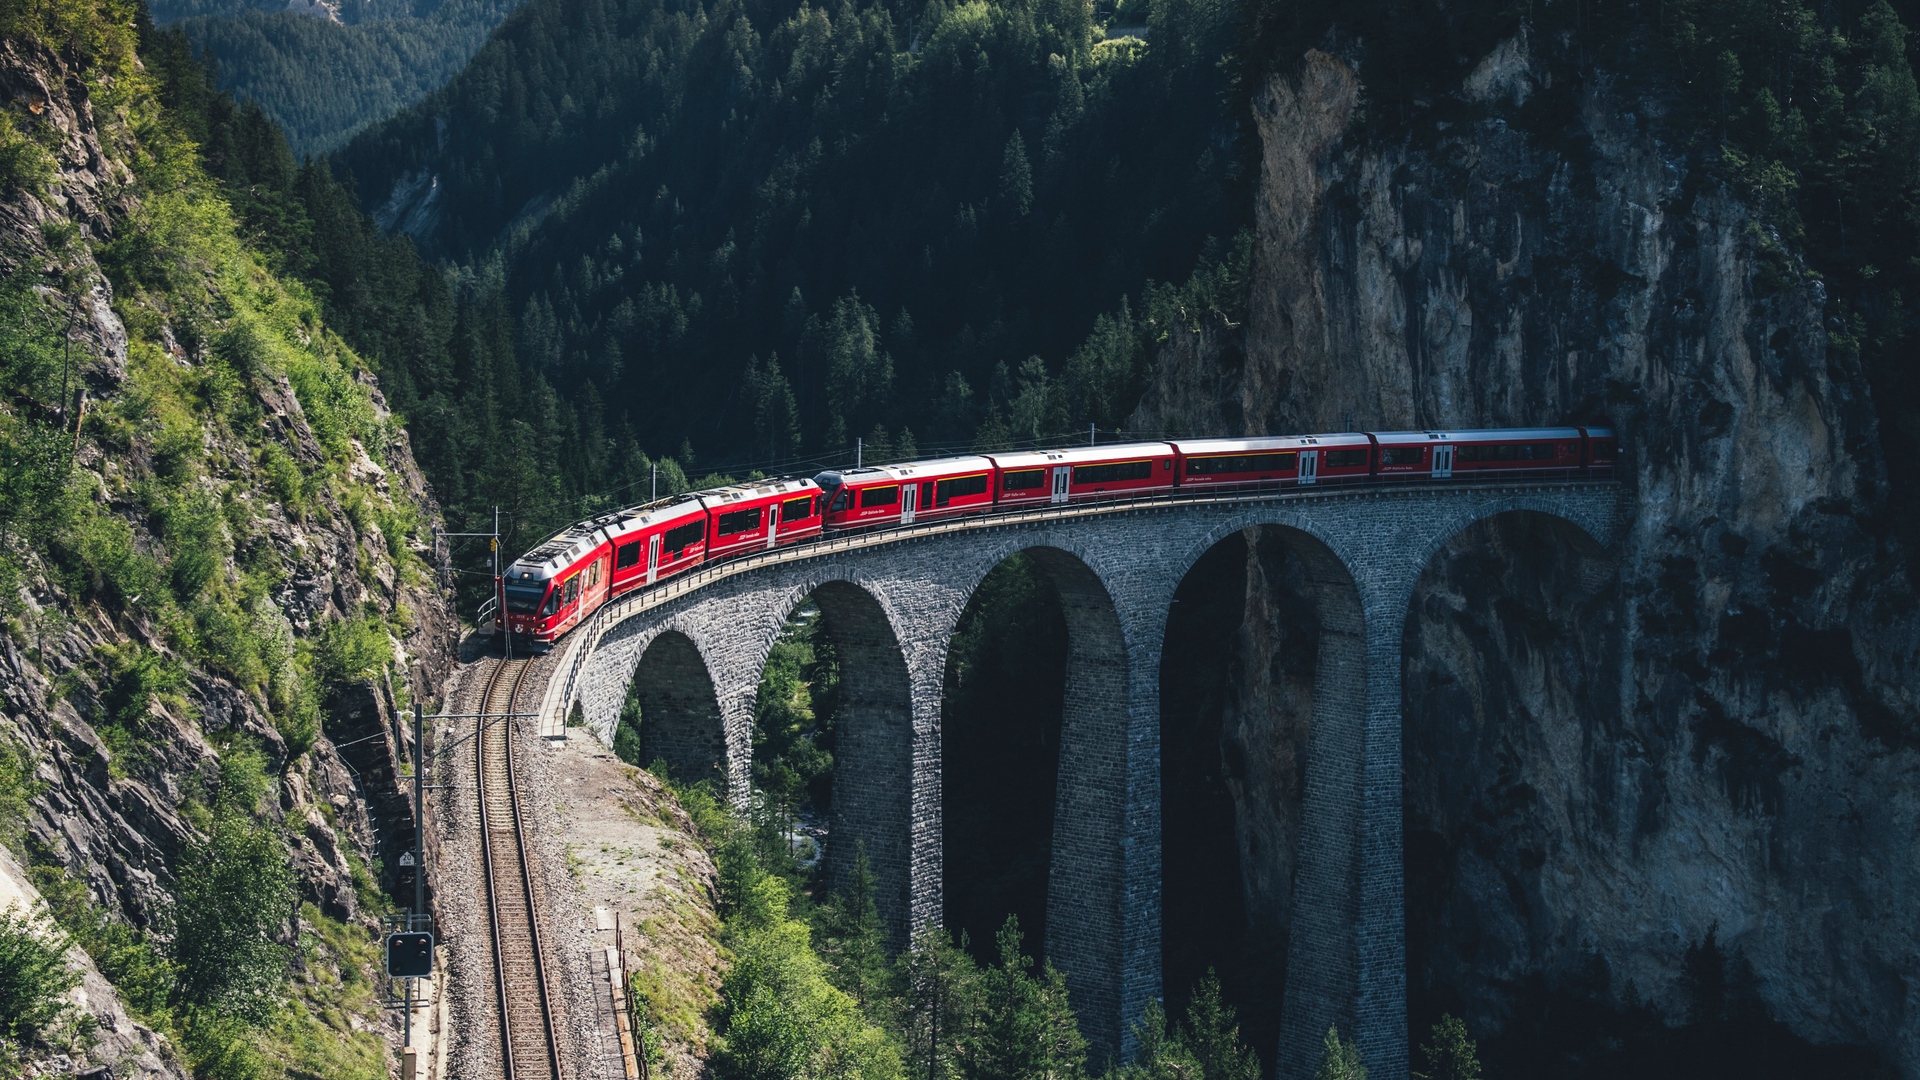 General 1920x1080 train mountains aerial view bridge railway Switzerland Bernina Pass Glacier Express Landwasser Viaduct